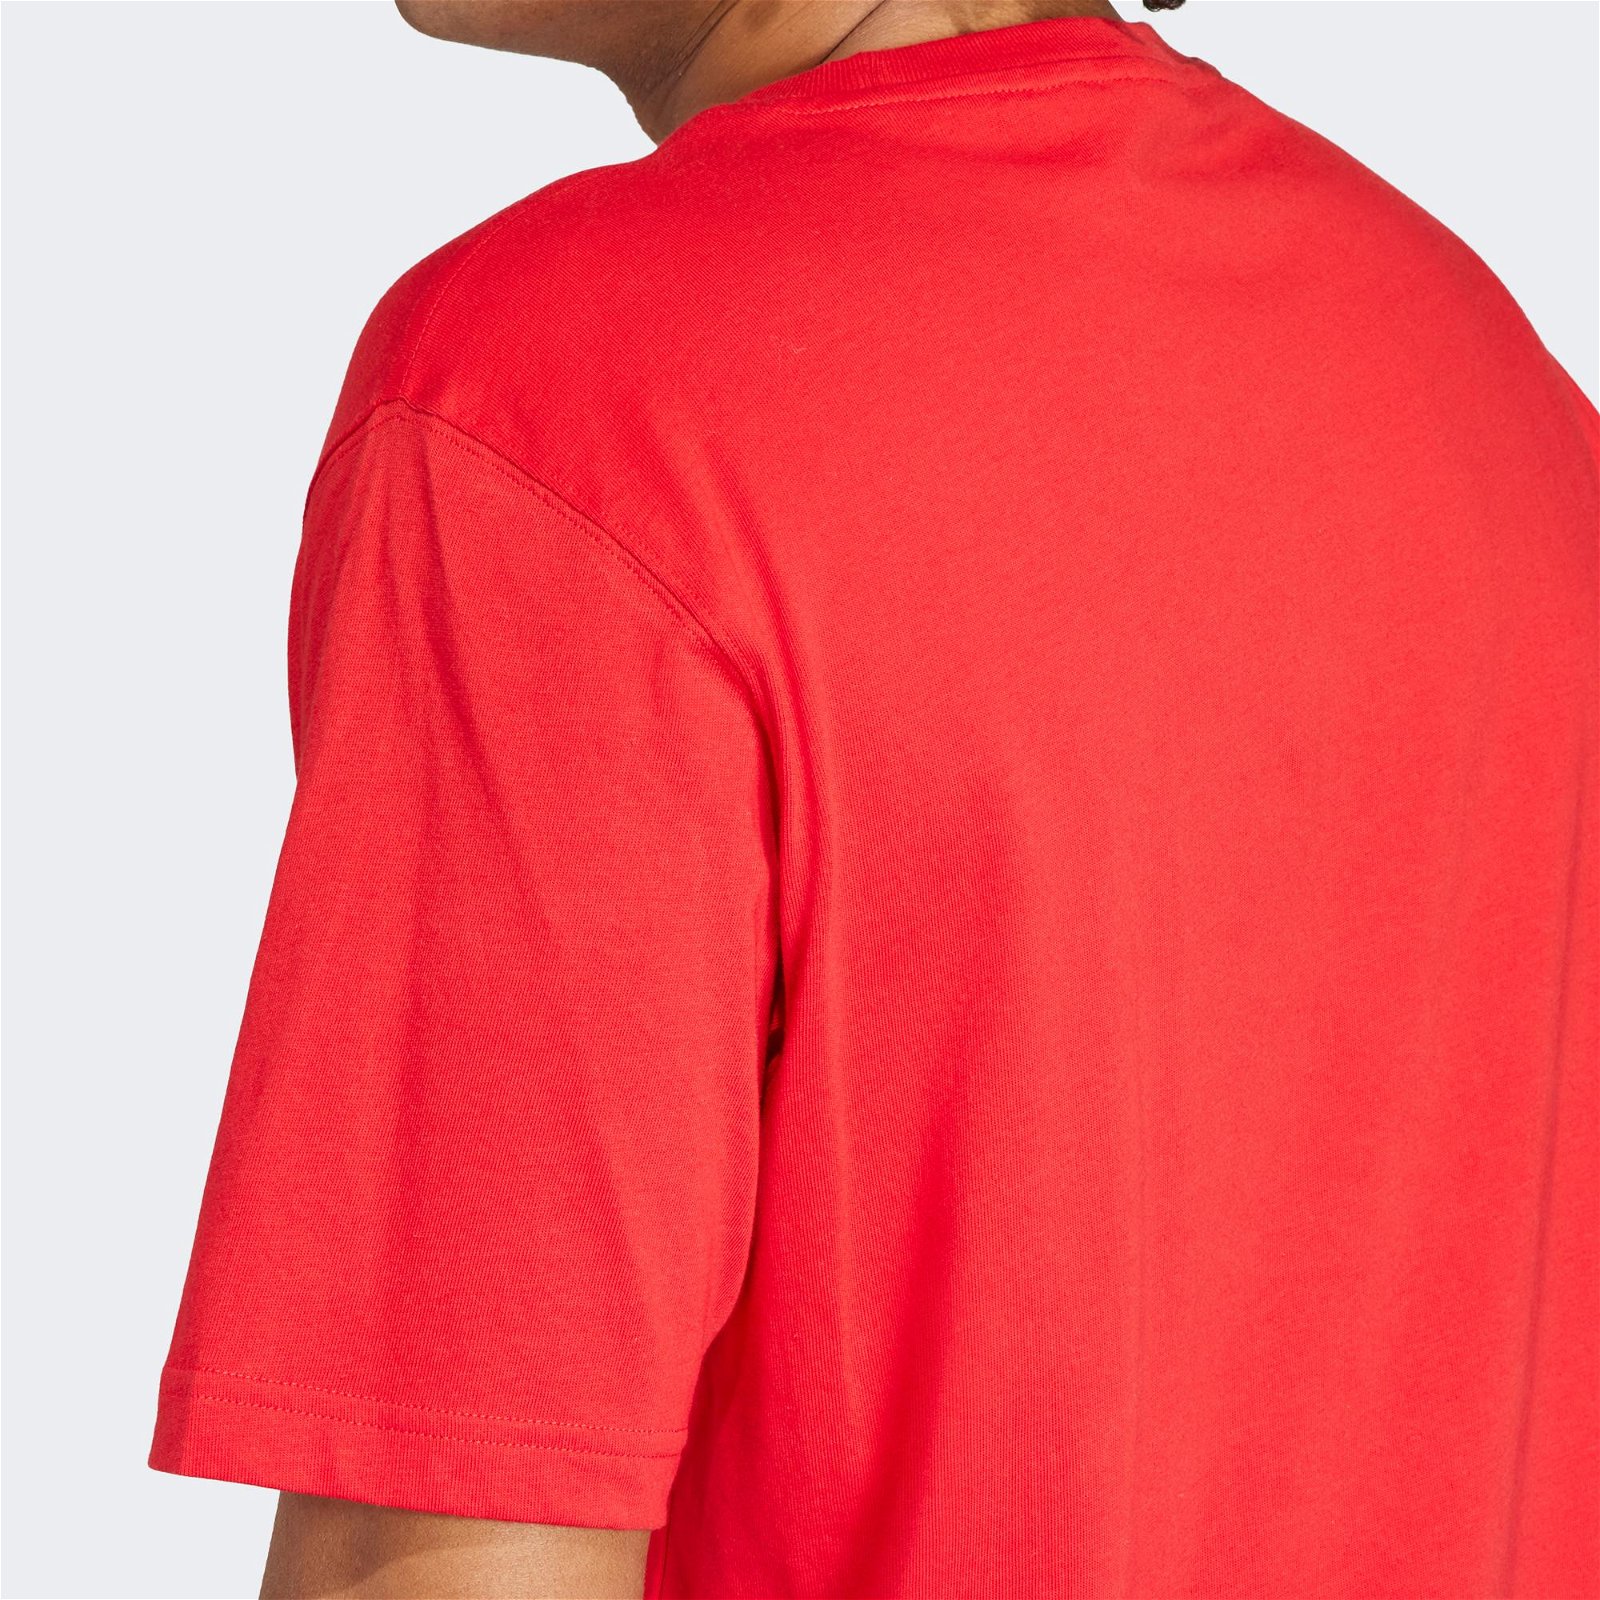 adidas Trefoil Erkek Kırmızı T-Shirt